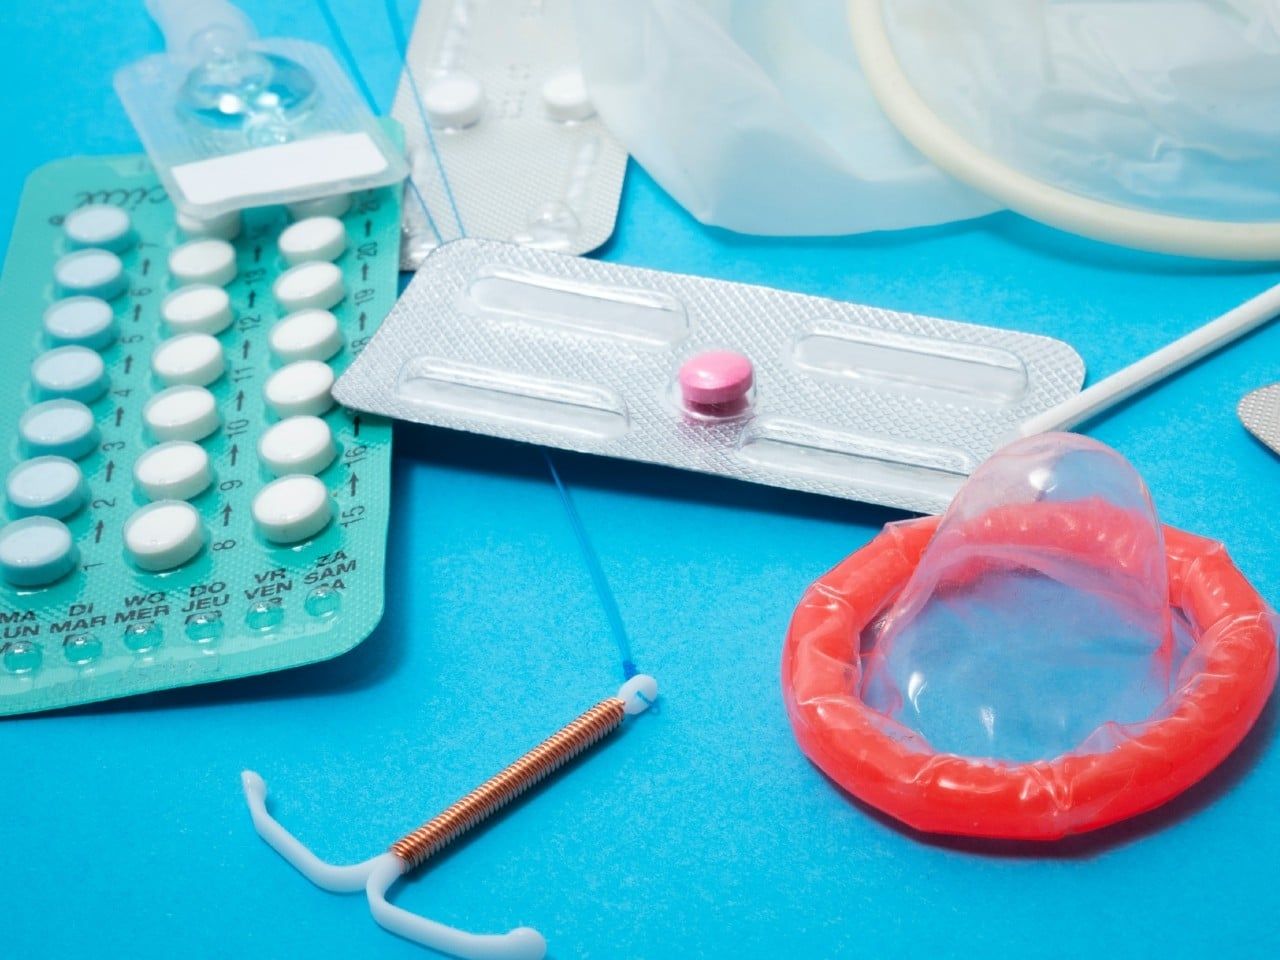 Métodos anticonceptivos: Te explicamos cuáles son